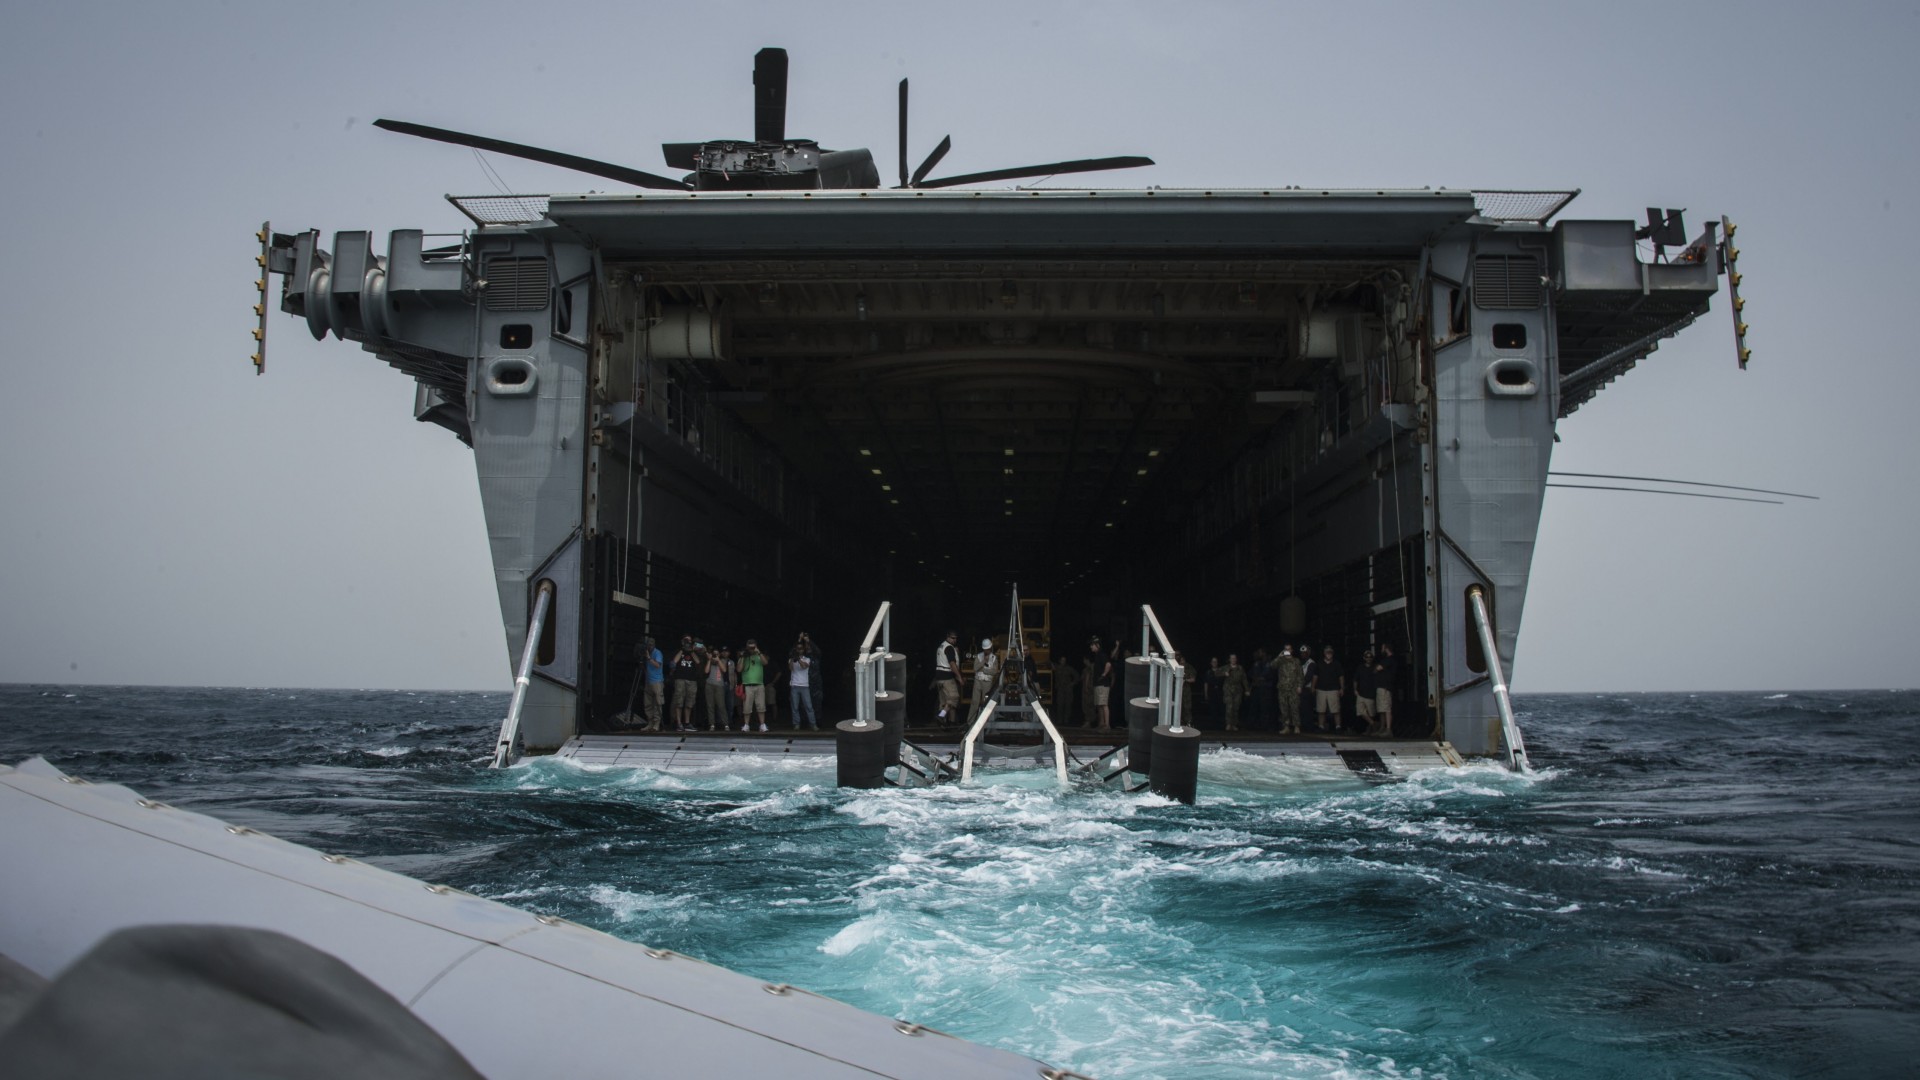 Остин, транспортный док, ВМС США, USS Ponce, USS Ponce, LPD-15, Austin-class, amphibious transport dock, U.S. Navy, rescue mission (horizontal)